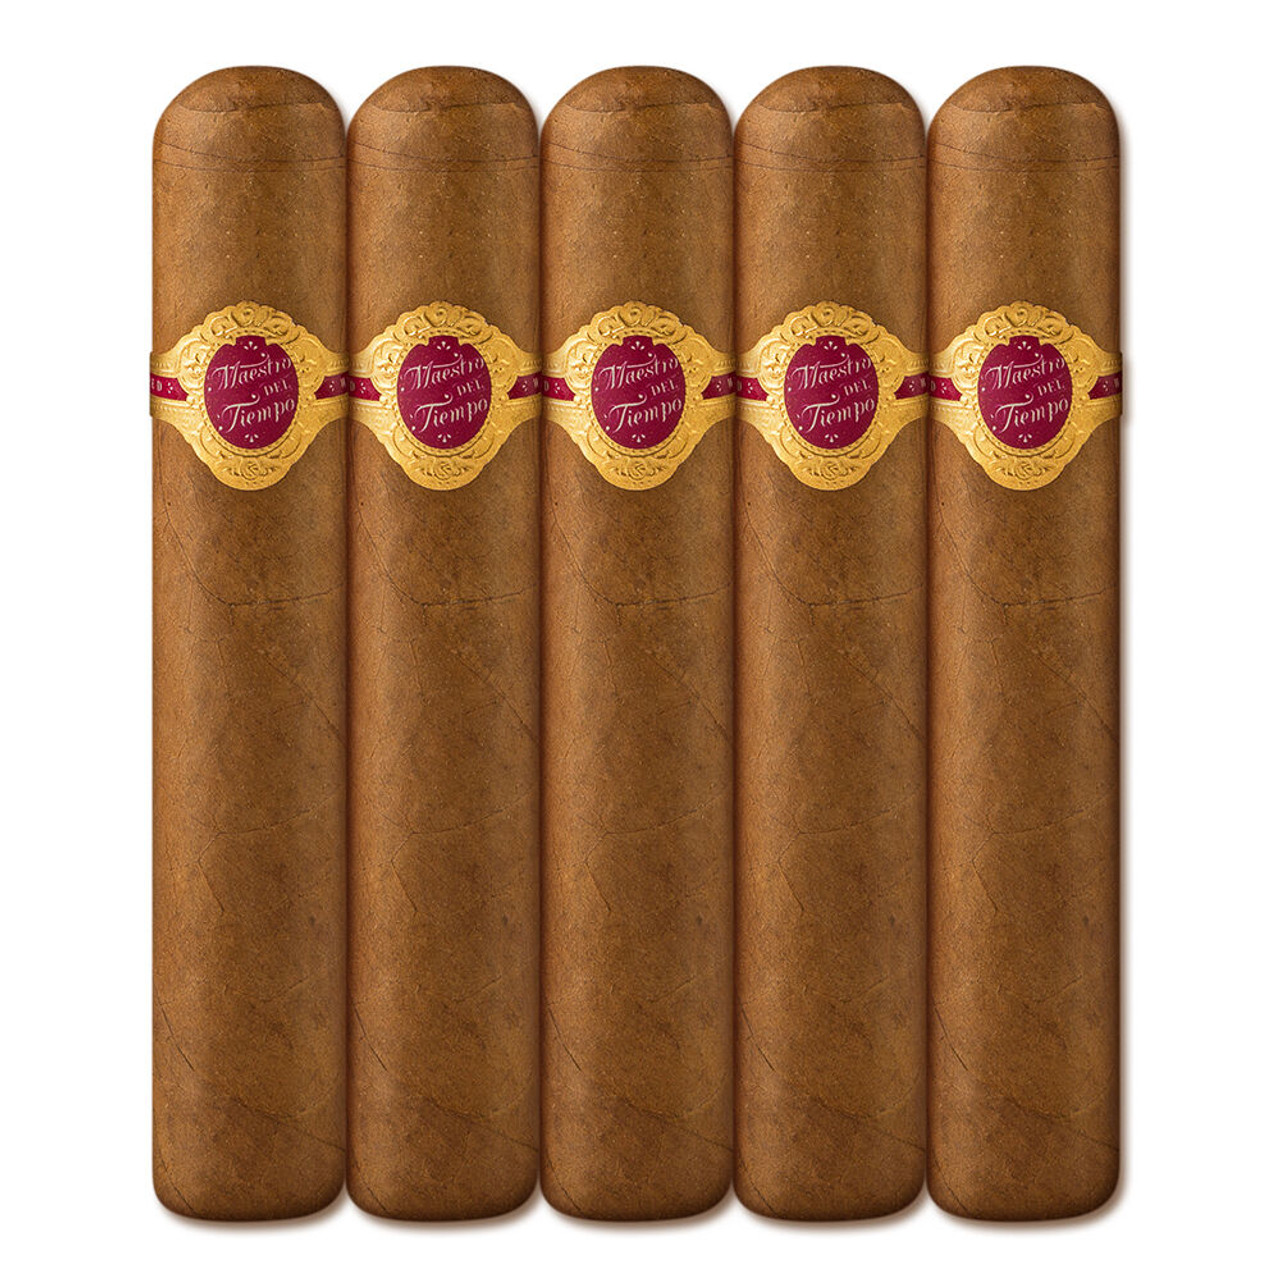 Warped Maestro del Tiempo 5712 Cigars - 4.5 x 52 (Pack of 5)